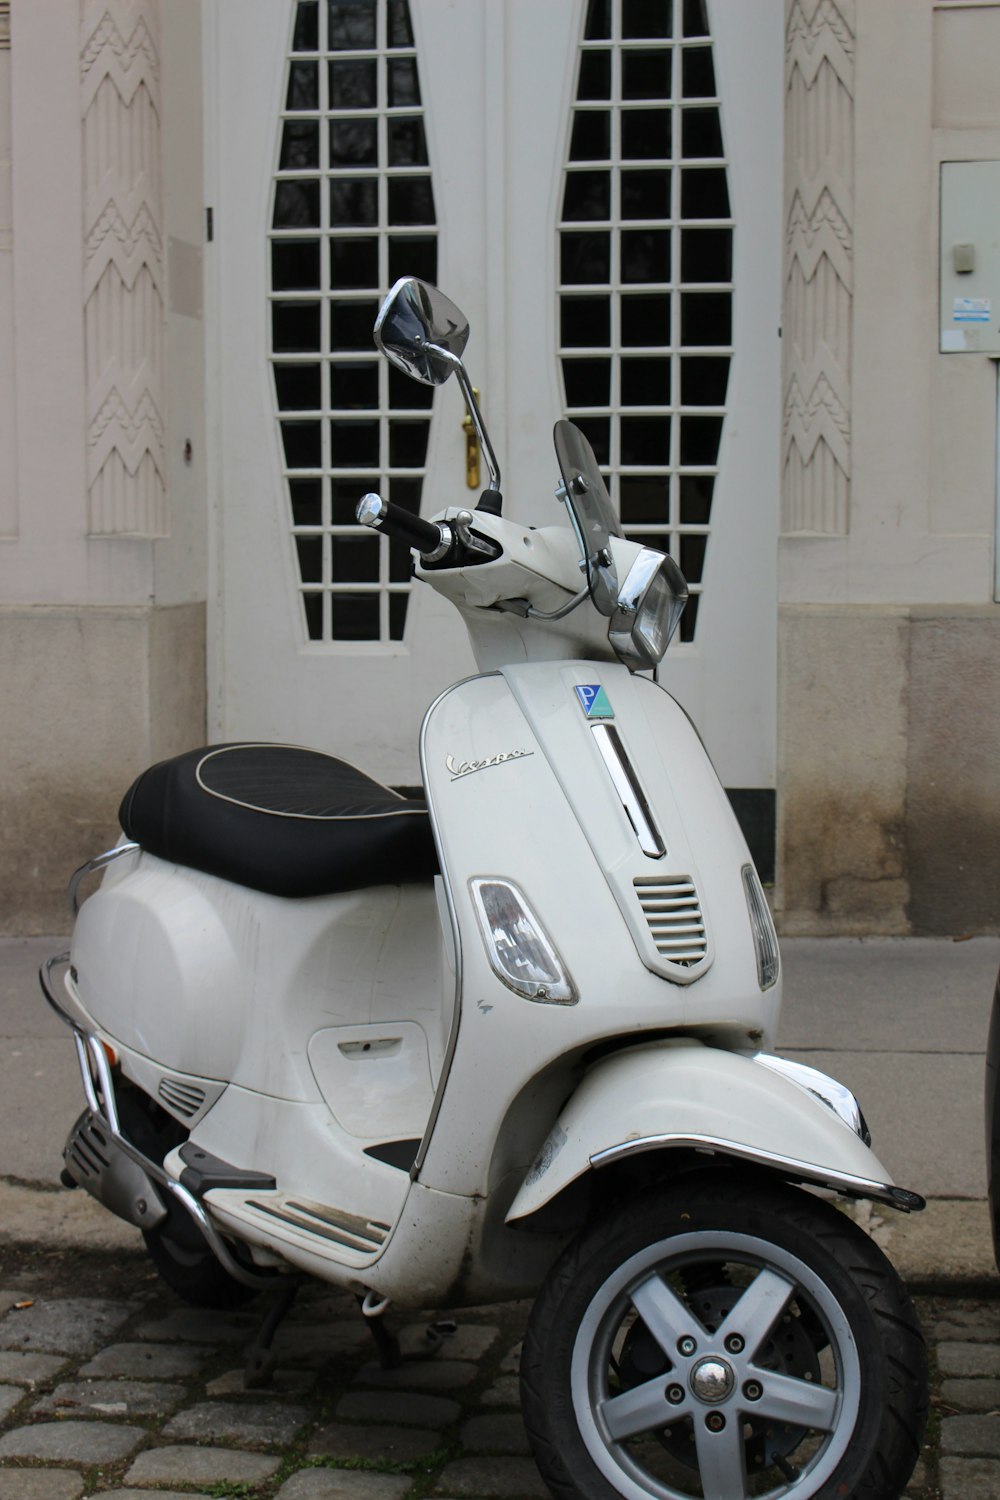 Un scooter blanco estacionado frente a un edificio